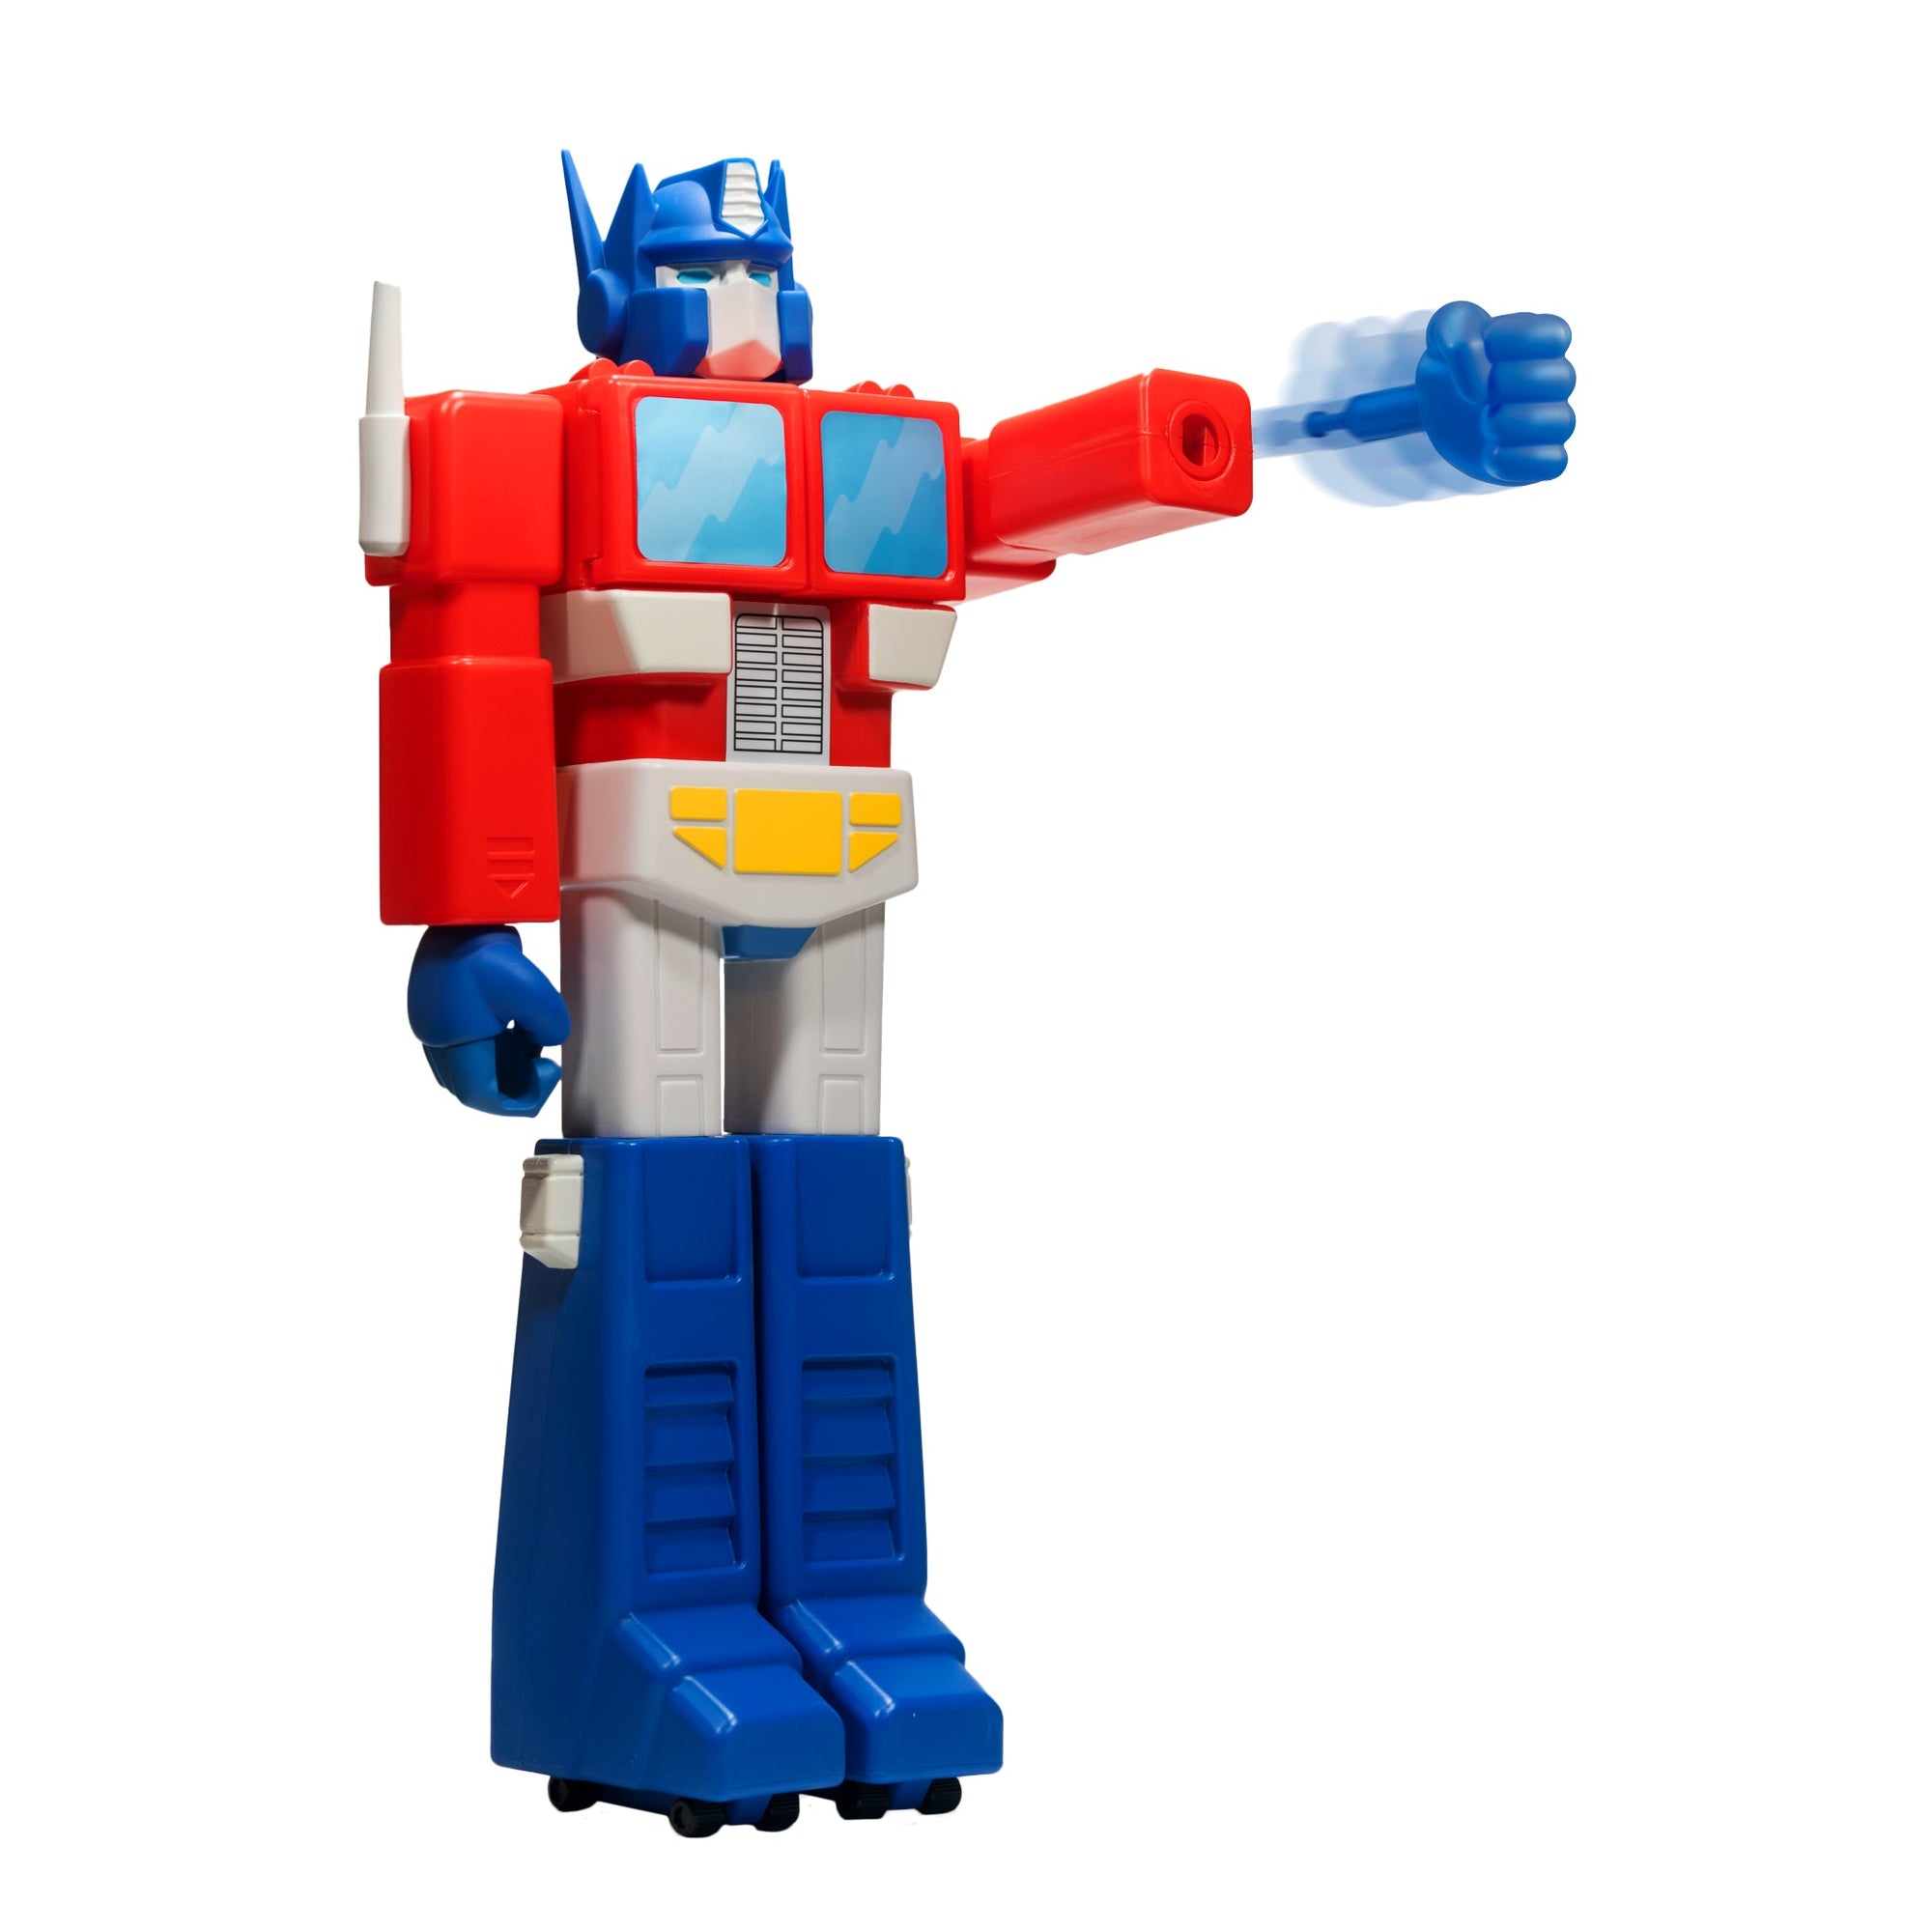 Optimus Prime - Transformer Super Shogun